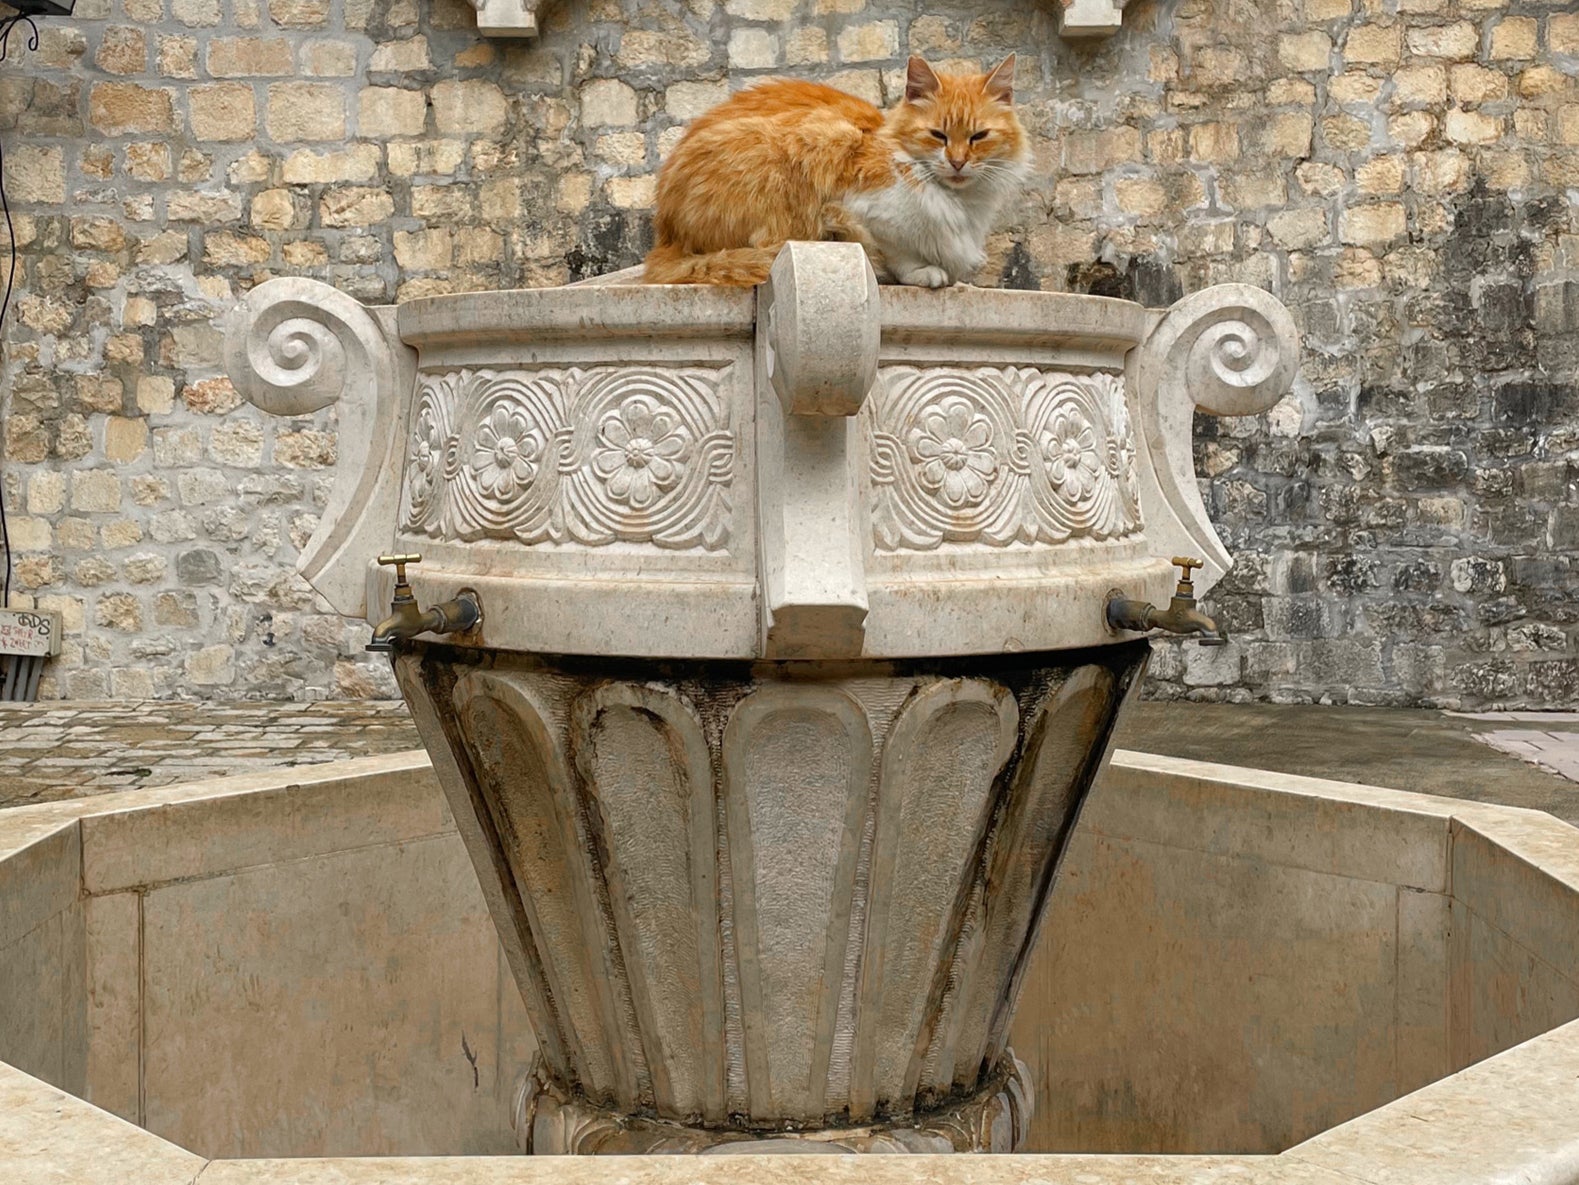 Kotor, where cats are treated like VIPs